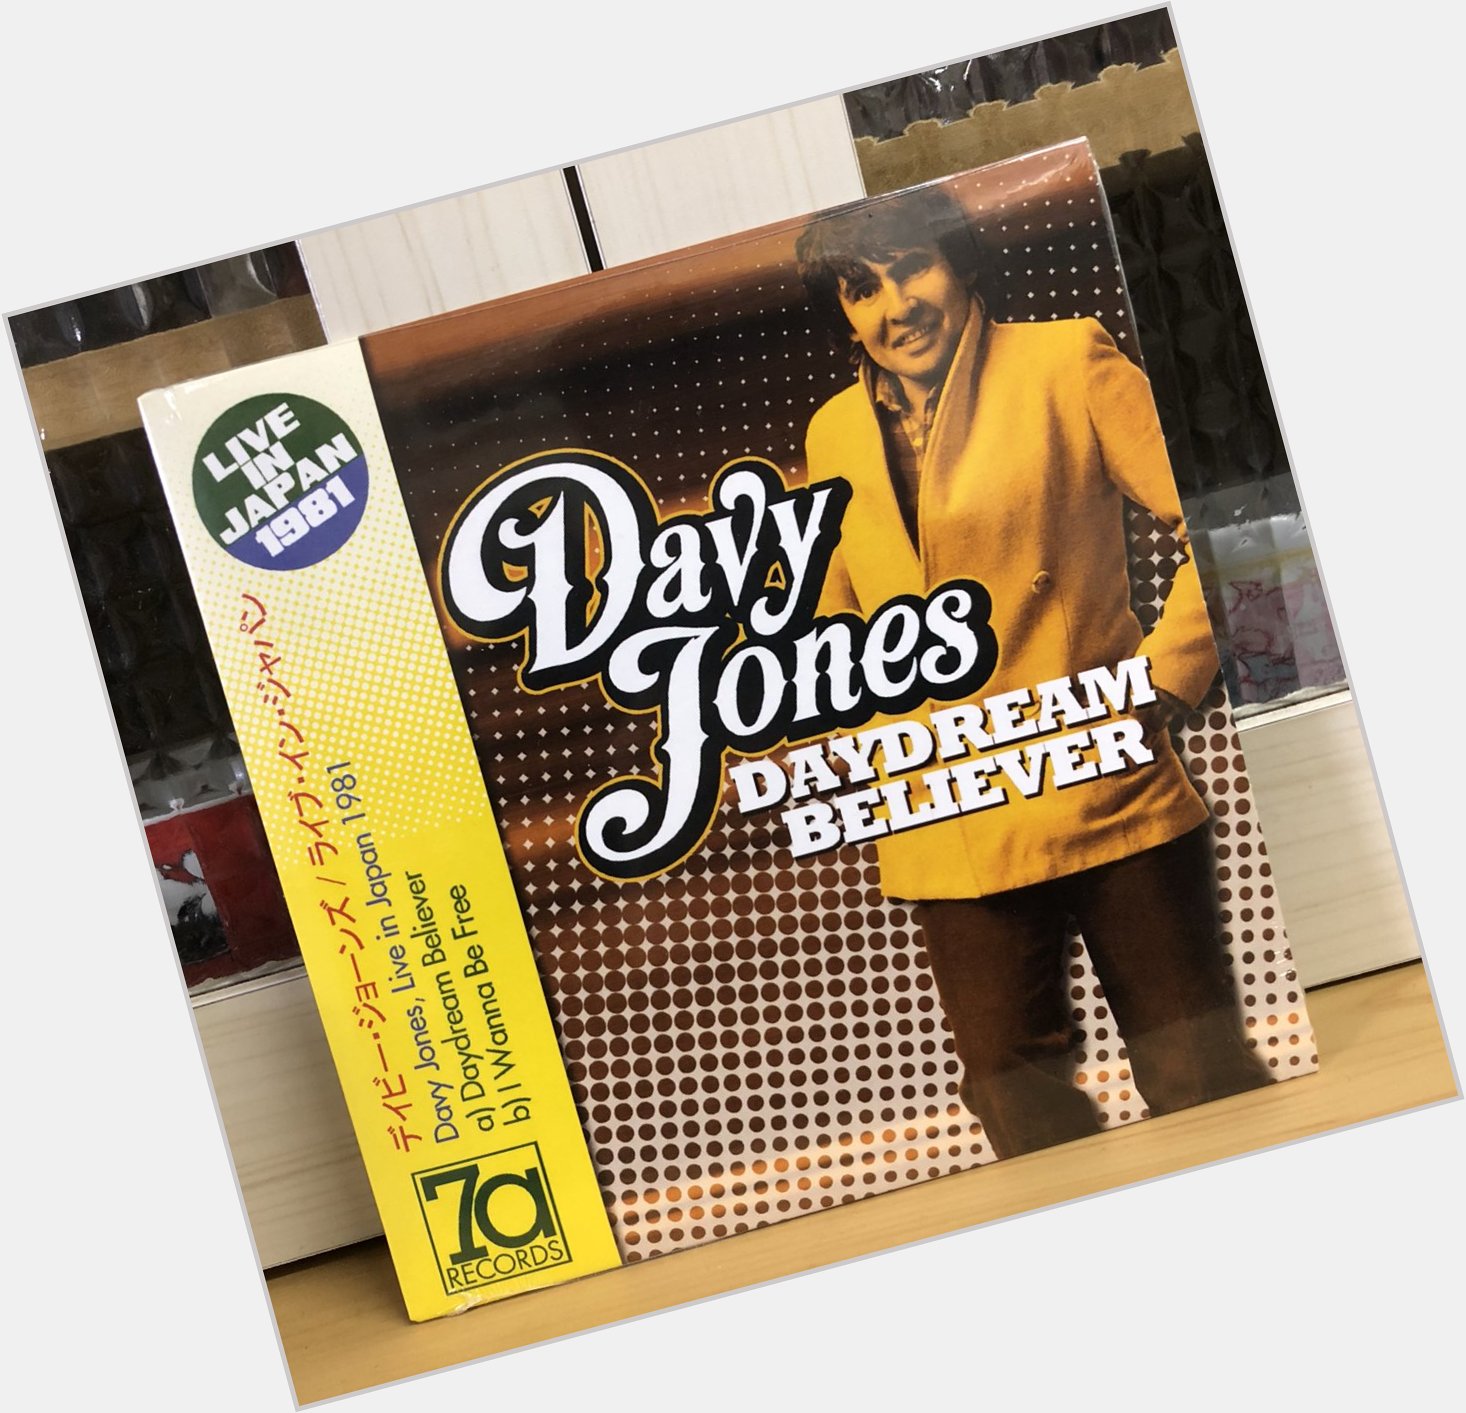 Happy birthday Davy Jones   This place is memories bench   